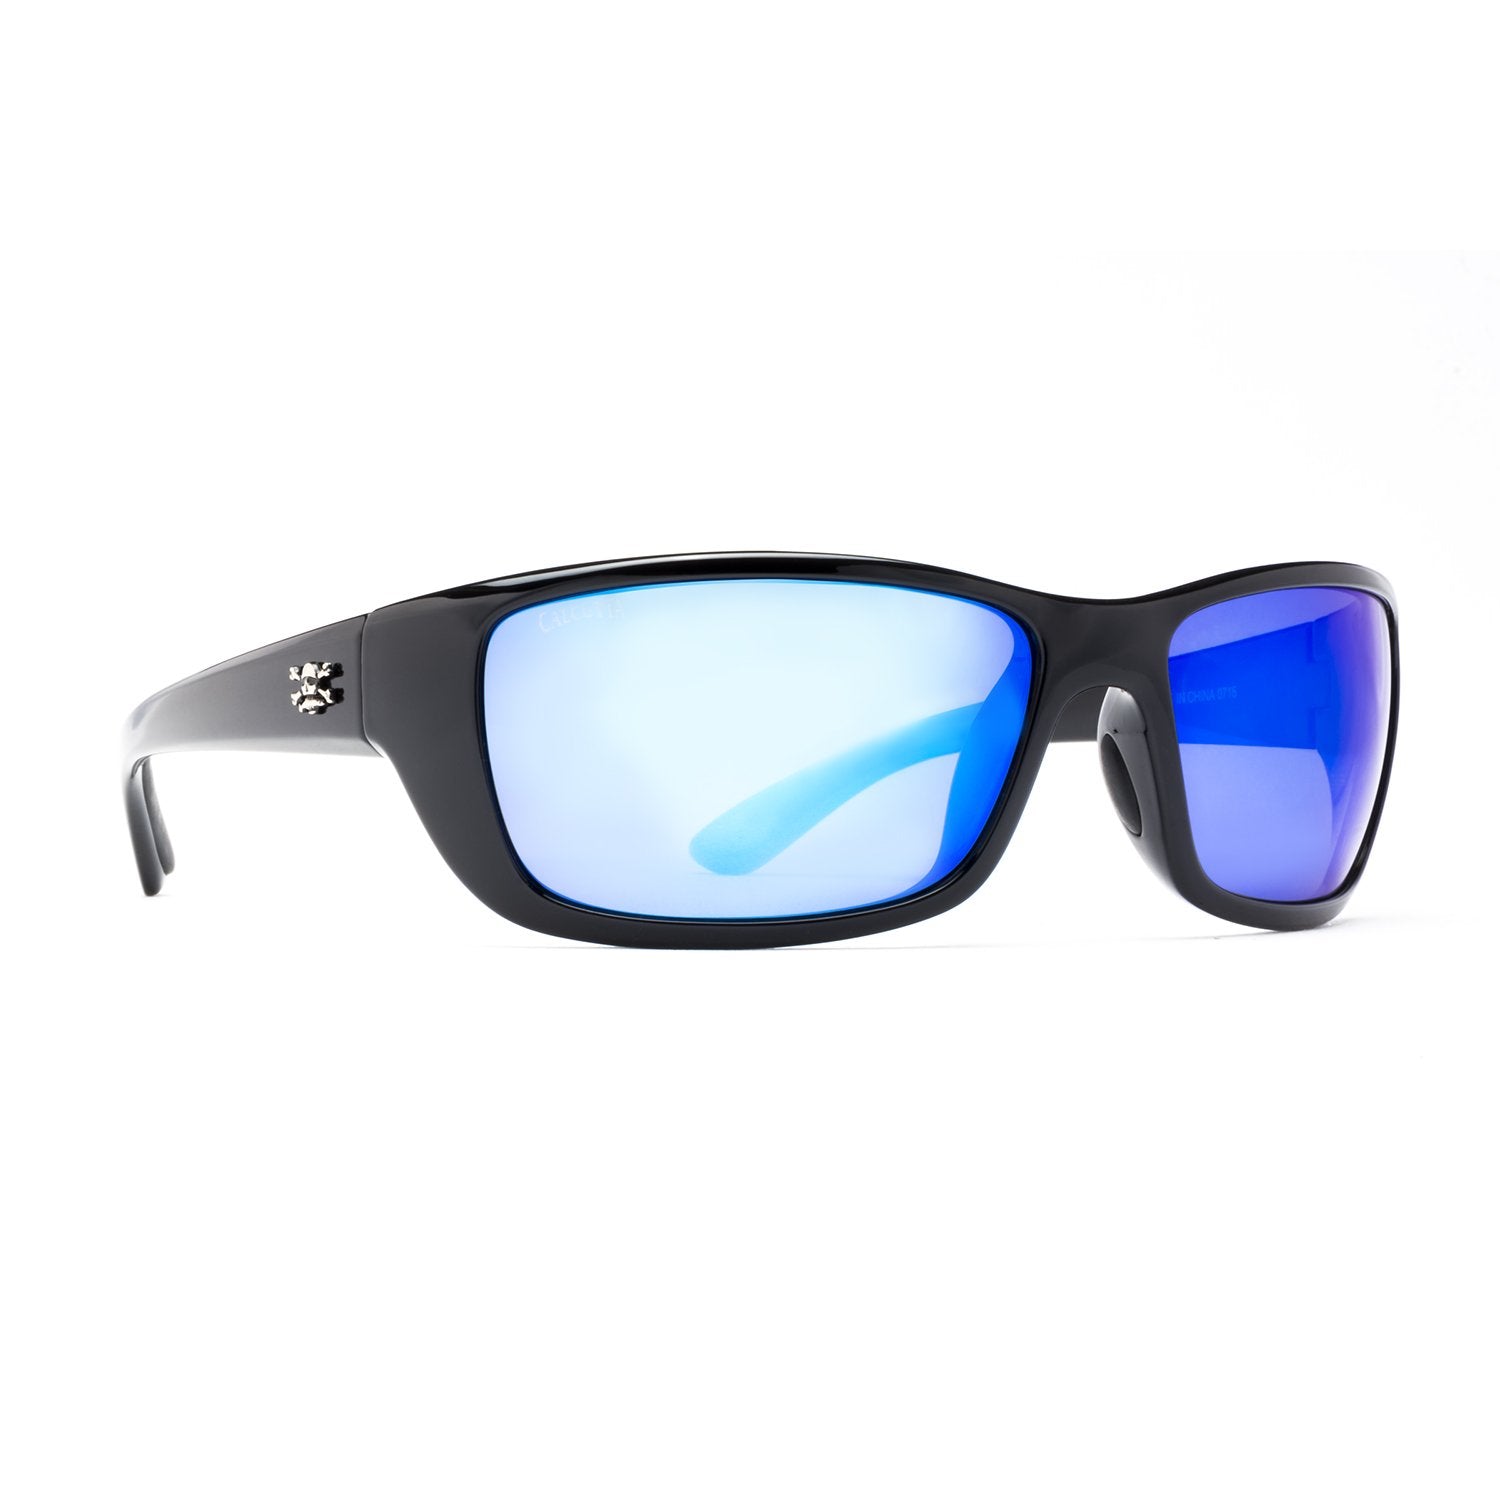 Calcutta Boca sunglasses black frame blue mirror lens